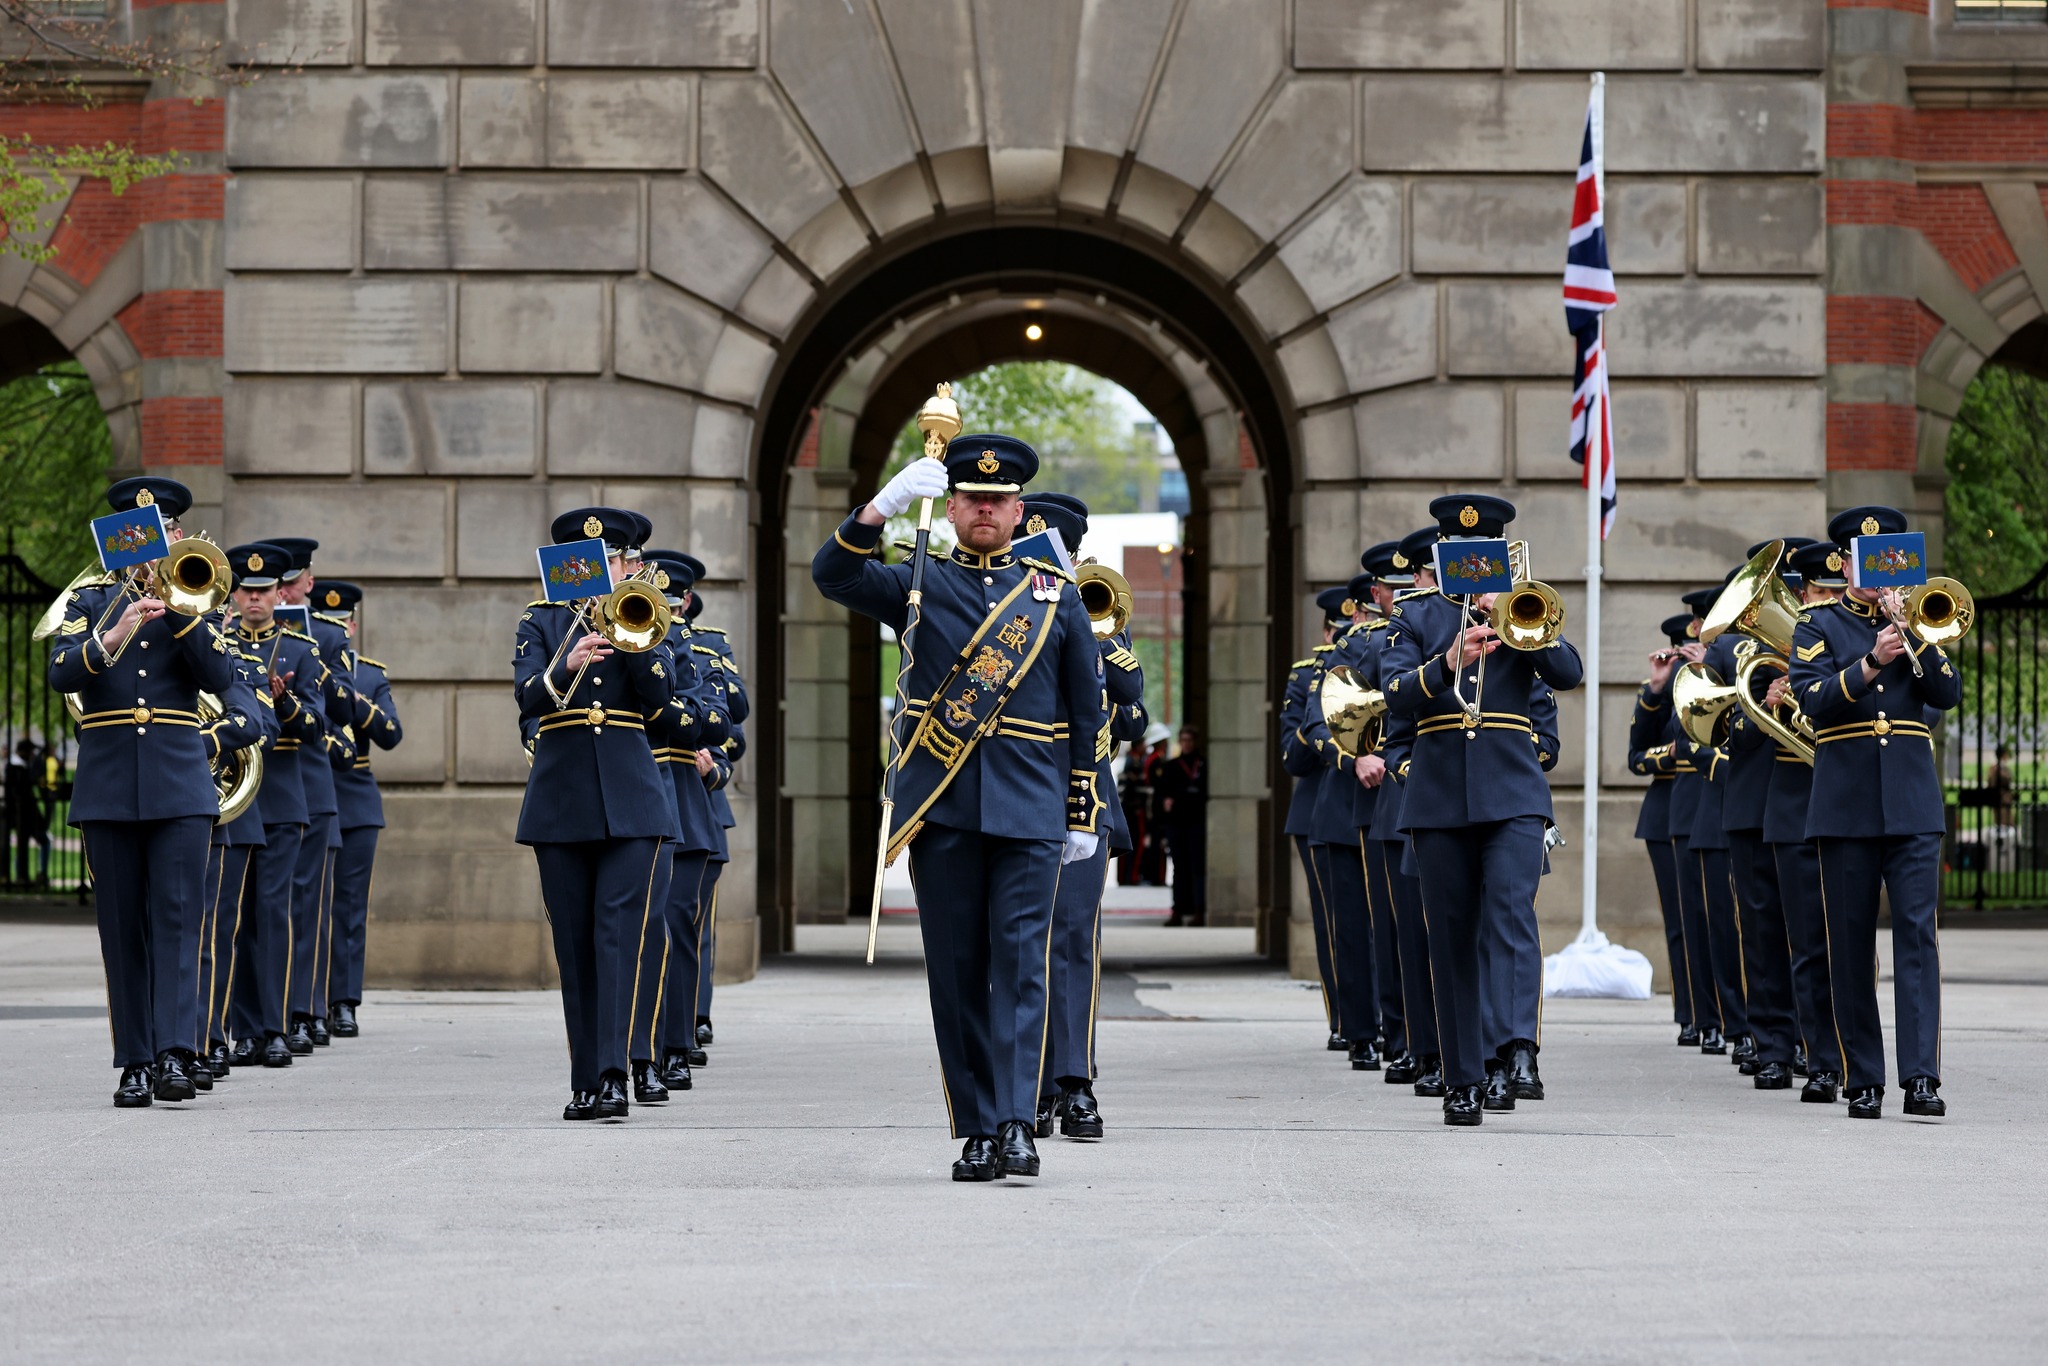 RAF band on parade.